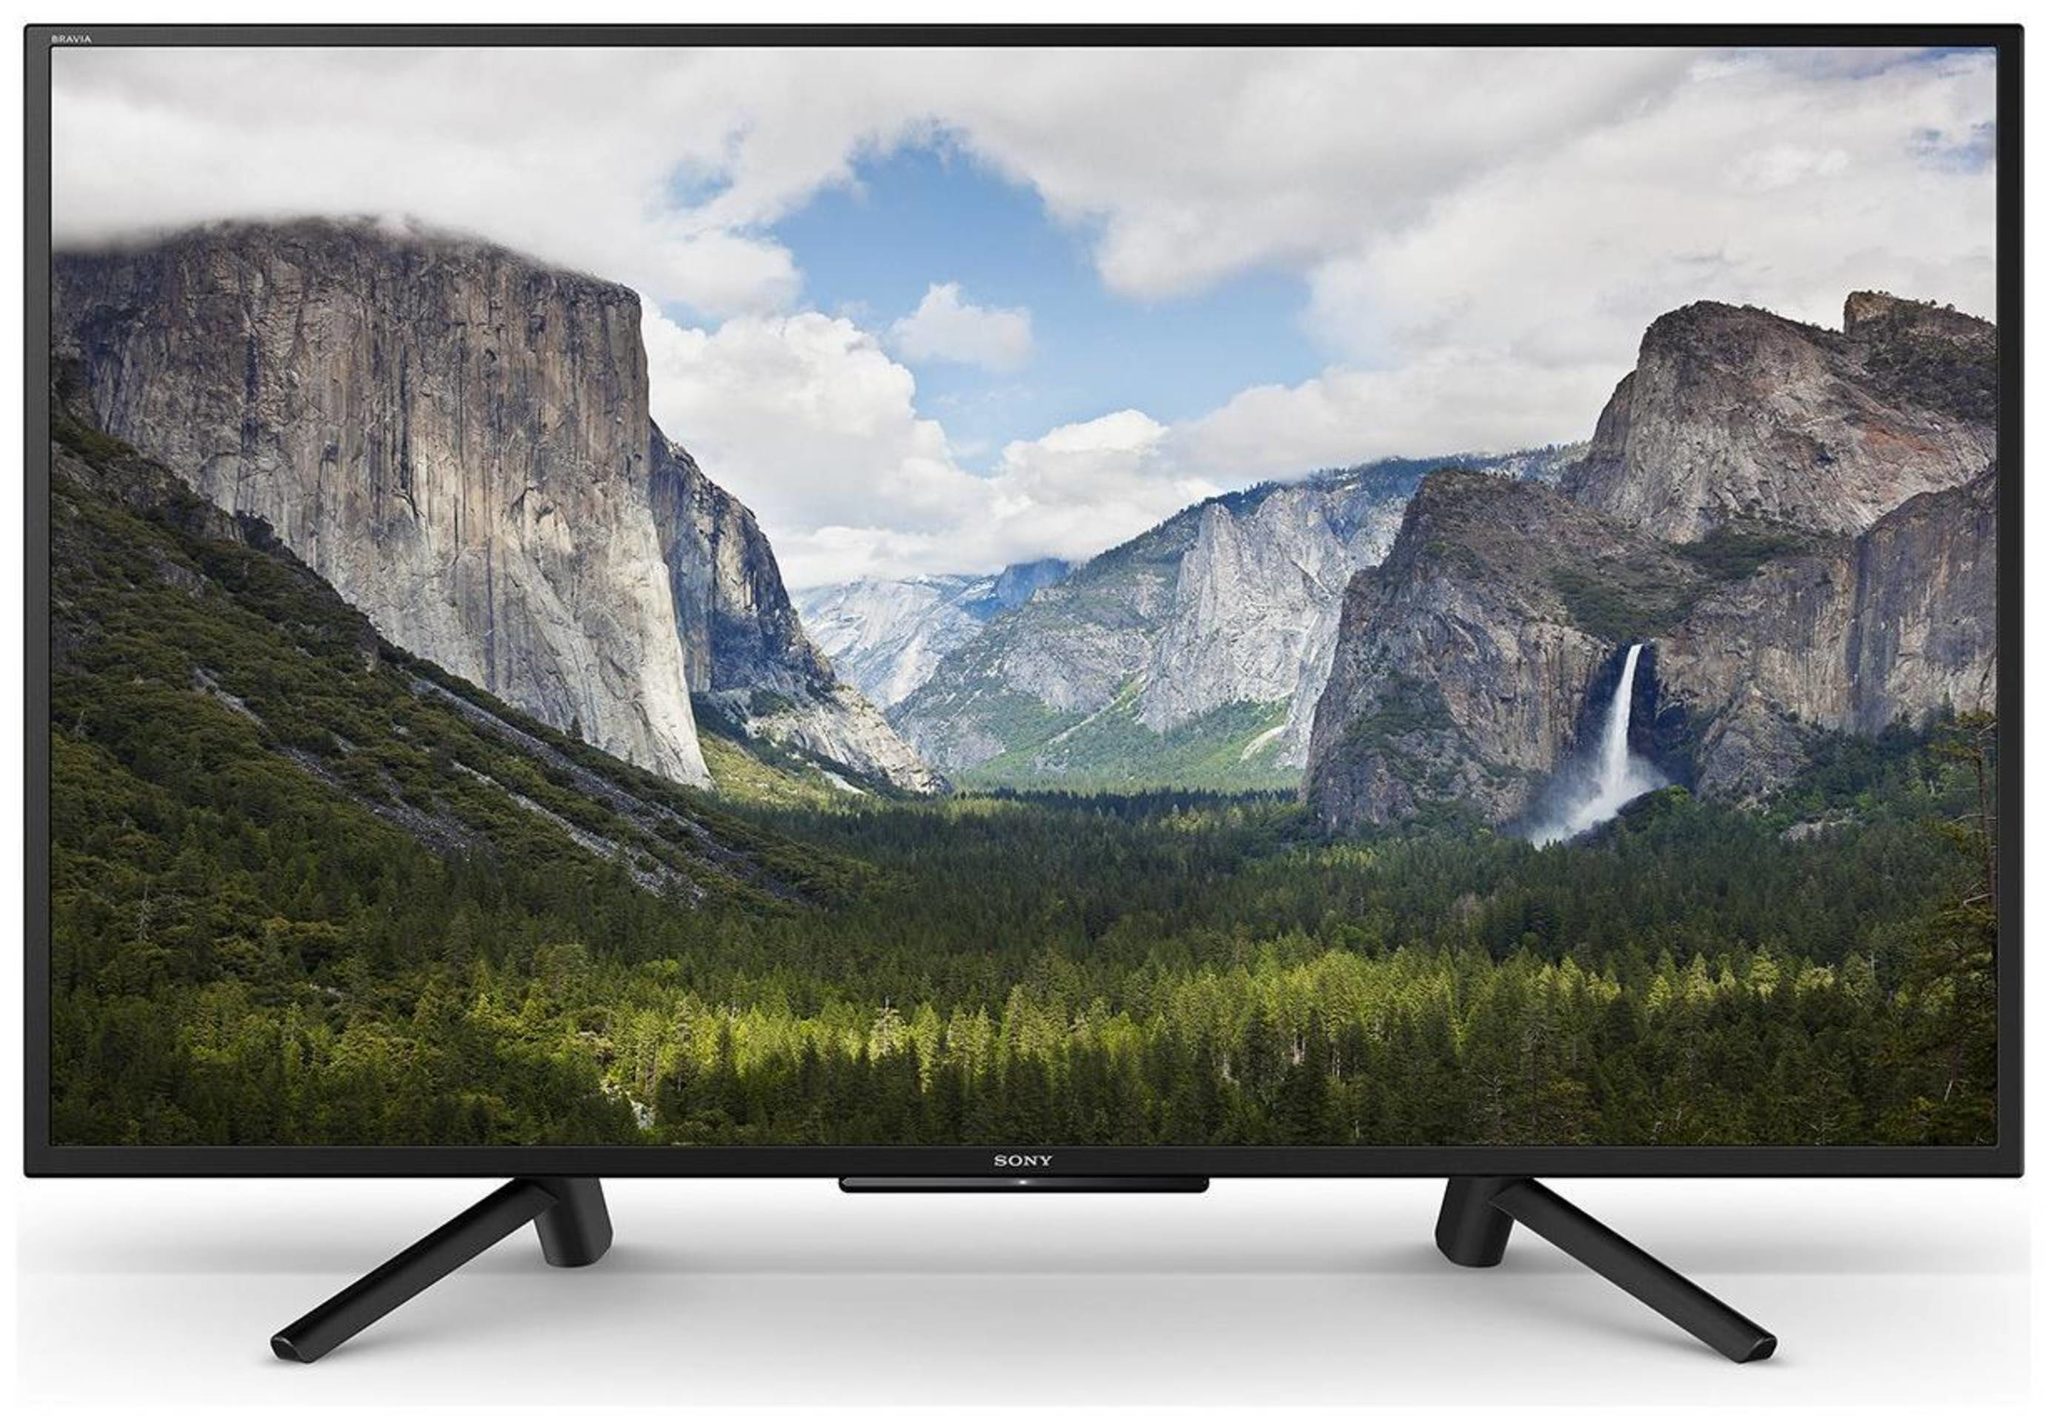 Buy Sony 108 Cm 43 Inch Klv 43w662f Full Hd Smart Led Tv Online ₹49200 From Shopclues 1374